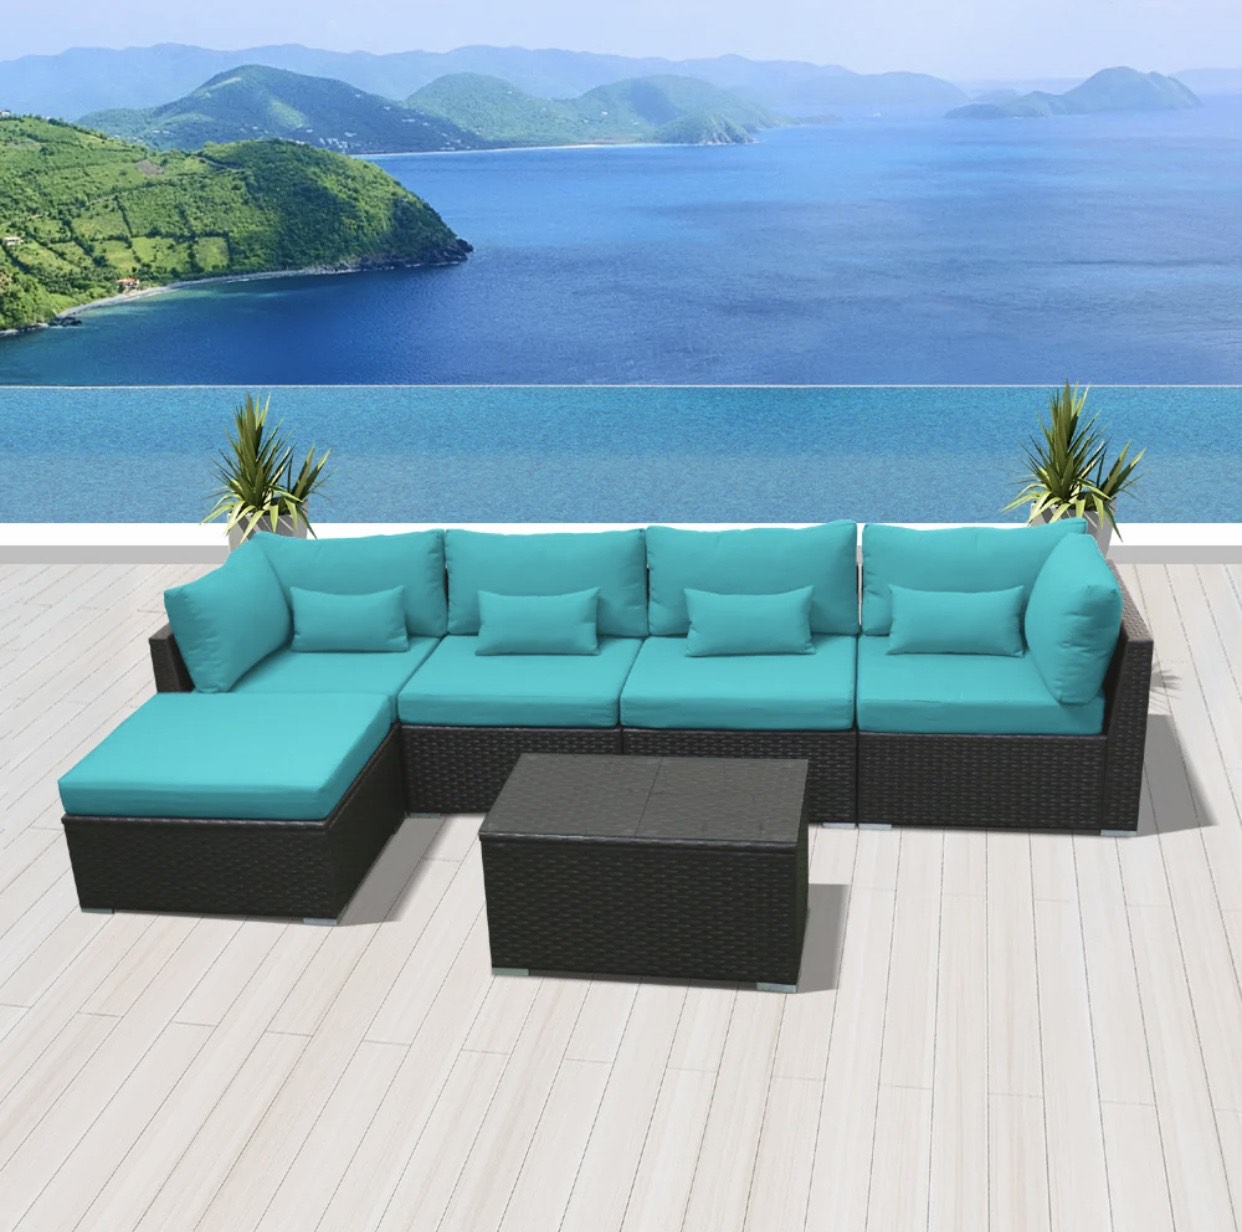 Blue Turquoise Big Modern Wicker Patio Furniture Sofa Set Six Piece 6